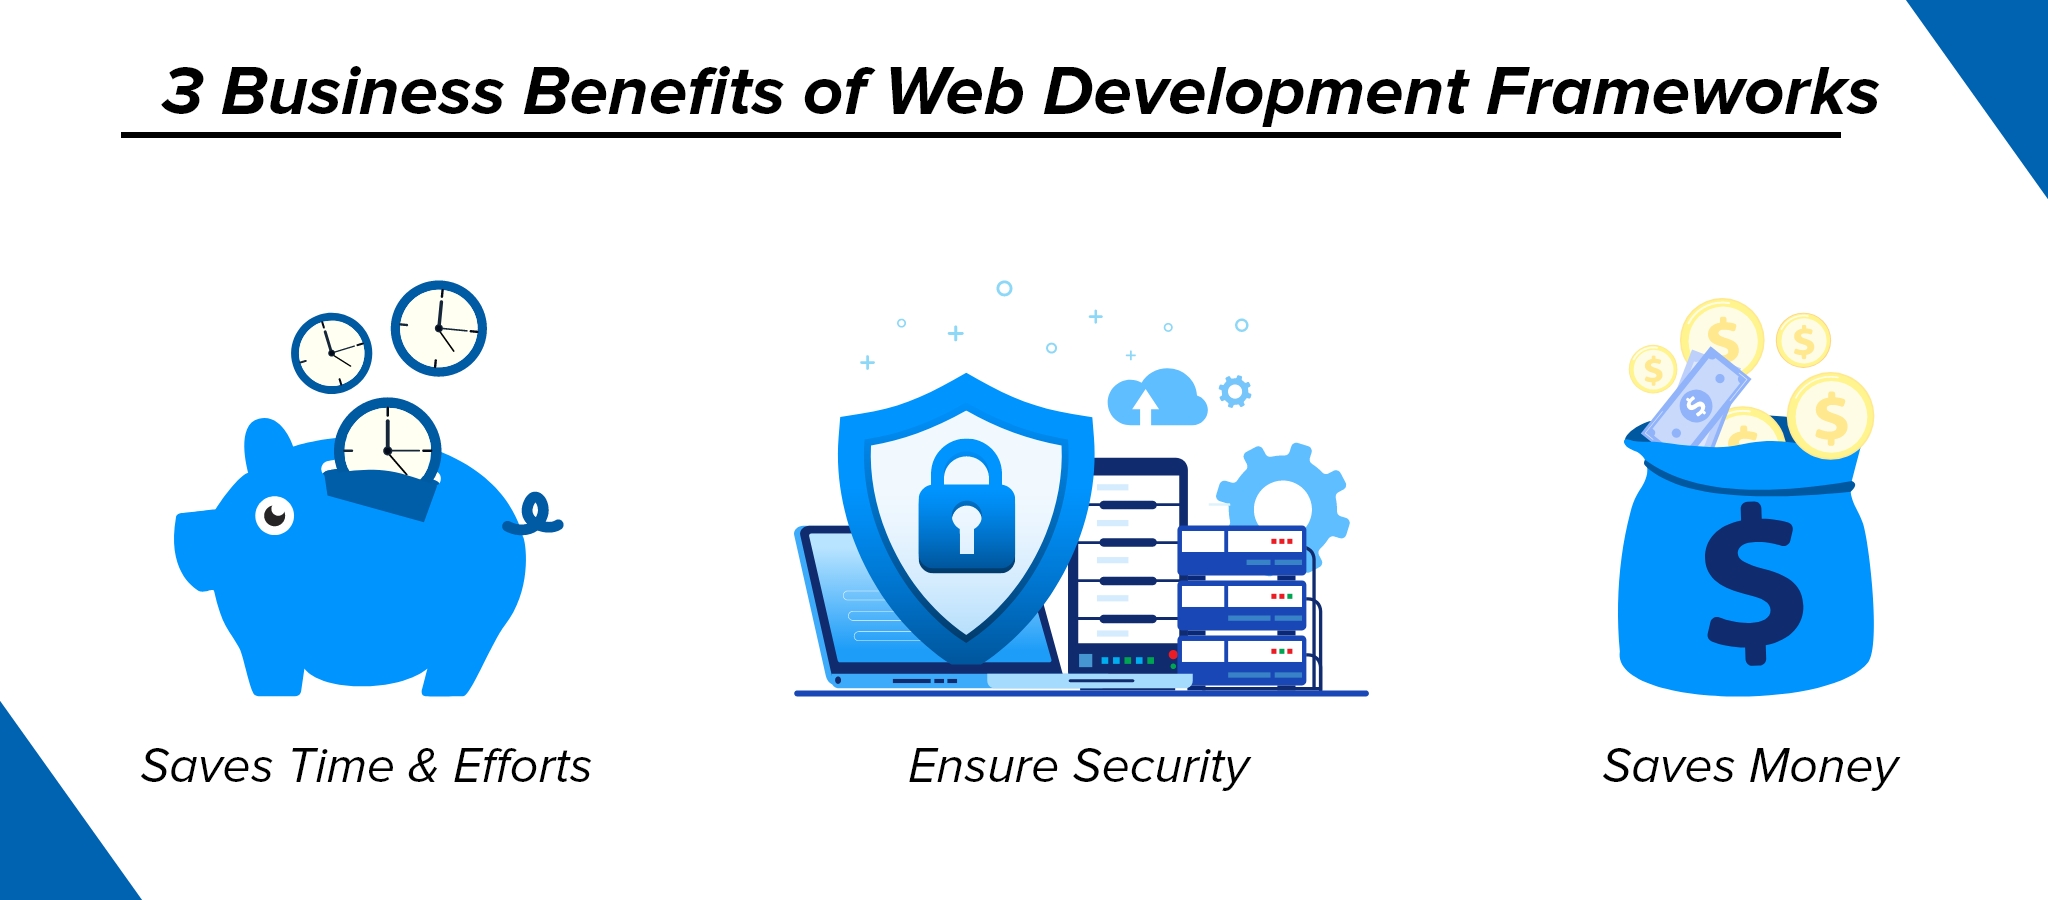 3 Business Benefits of Web Development Frameworks